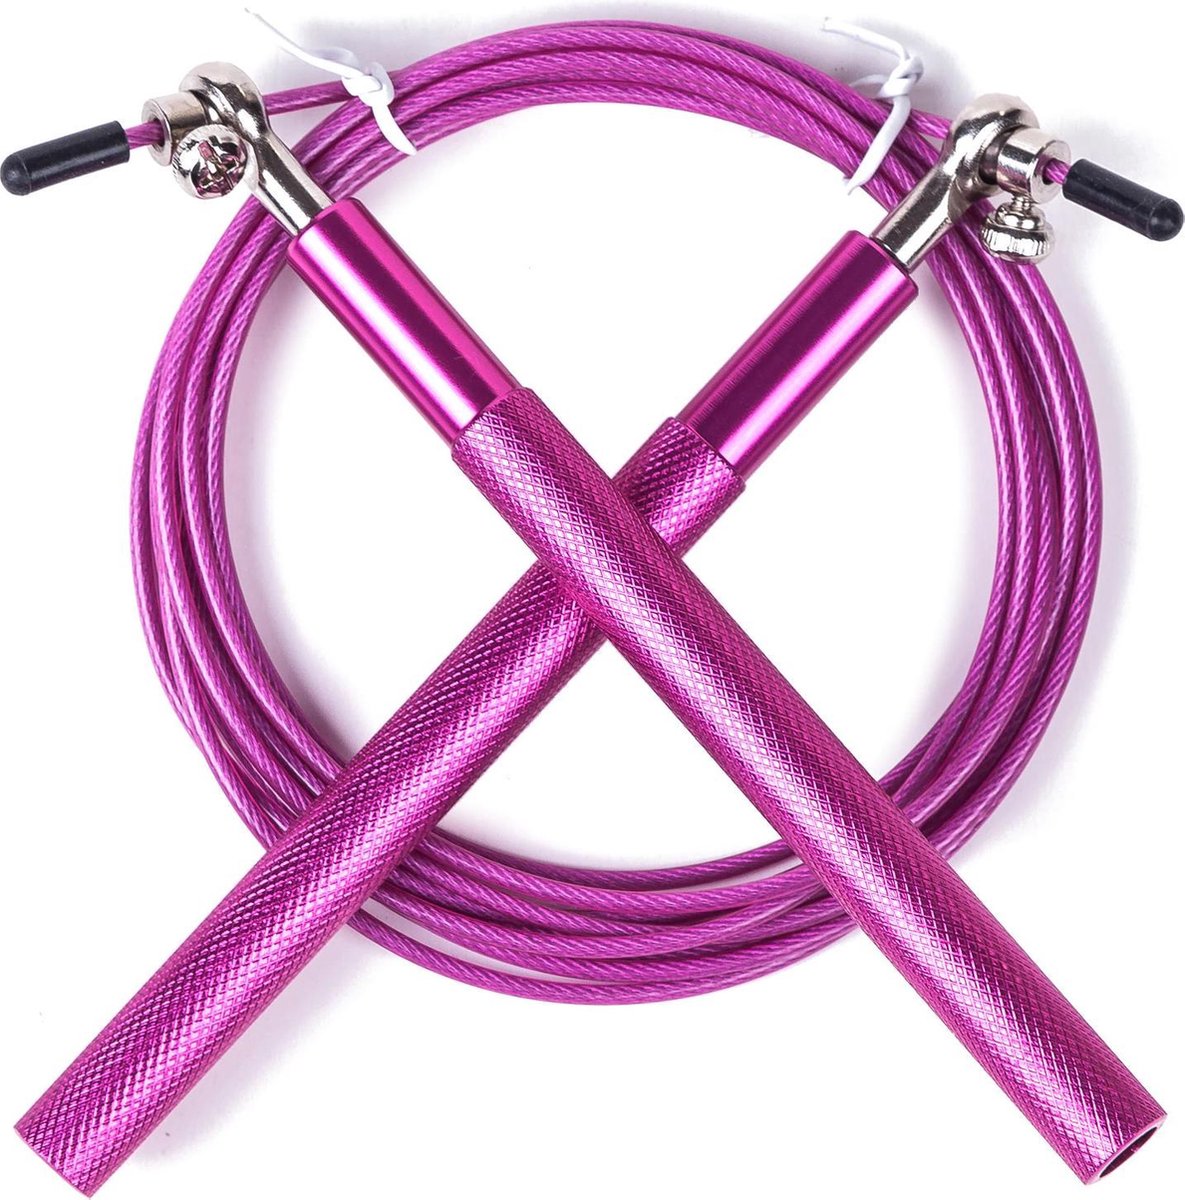 Springtouw Set Volwassenen - Crossfit jump rope - Ultimate Speedrope - roze